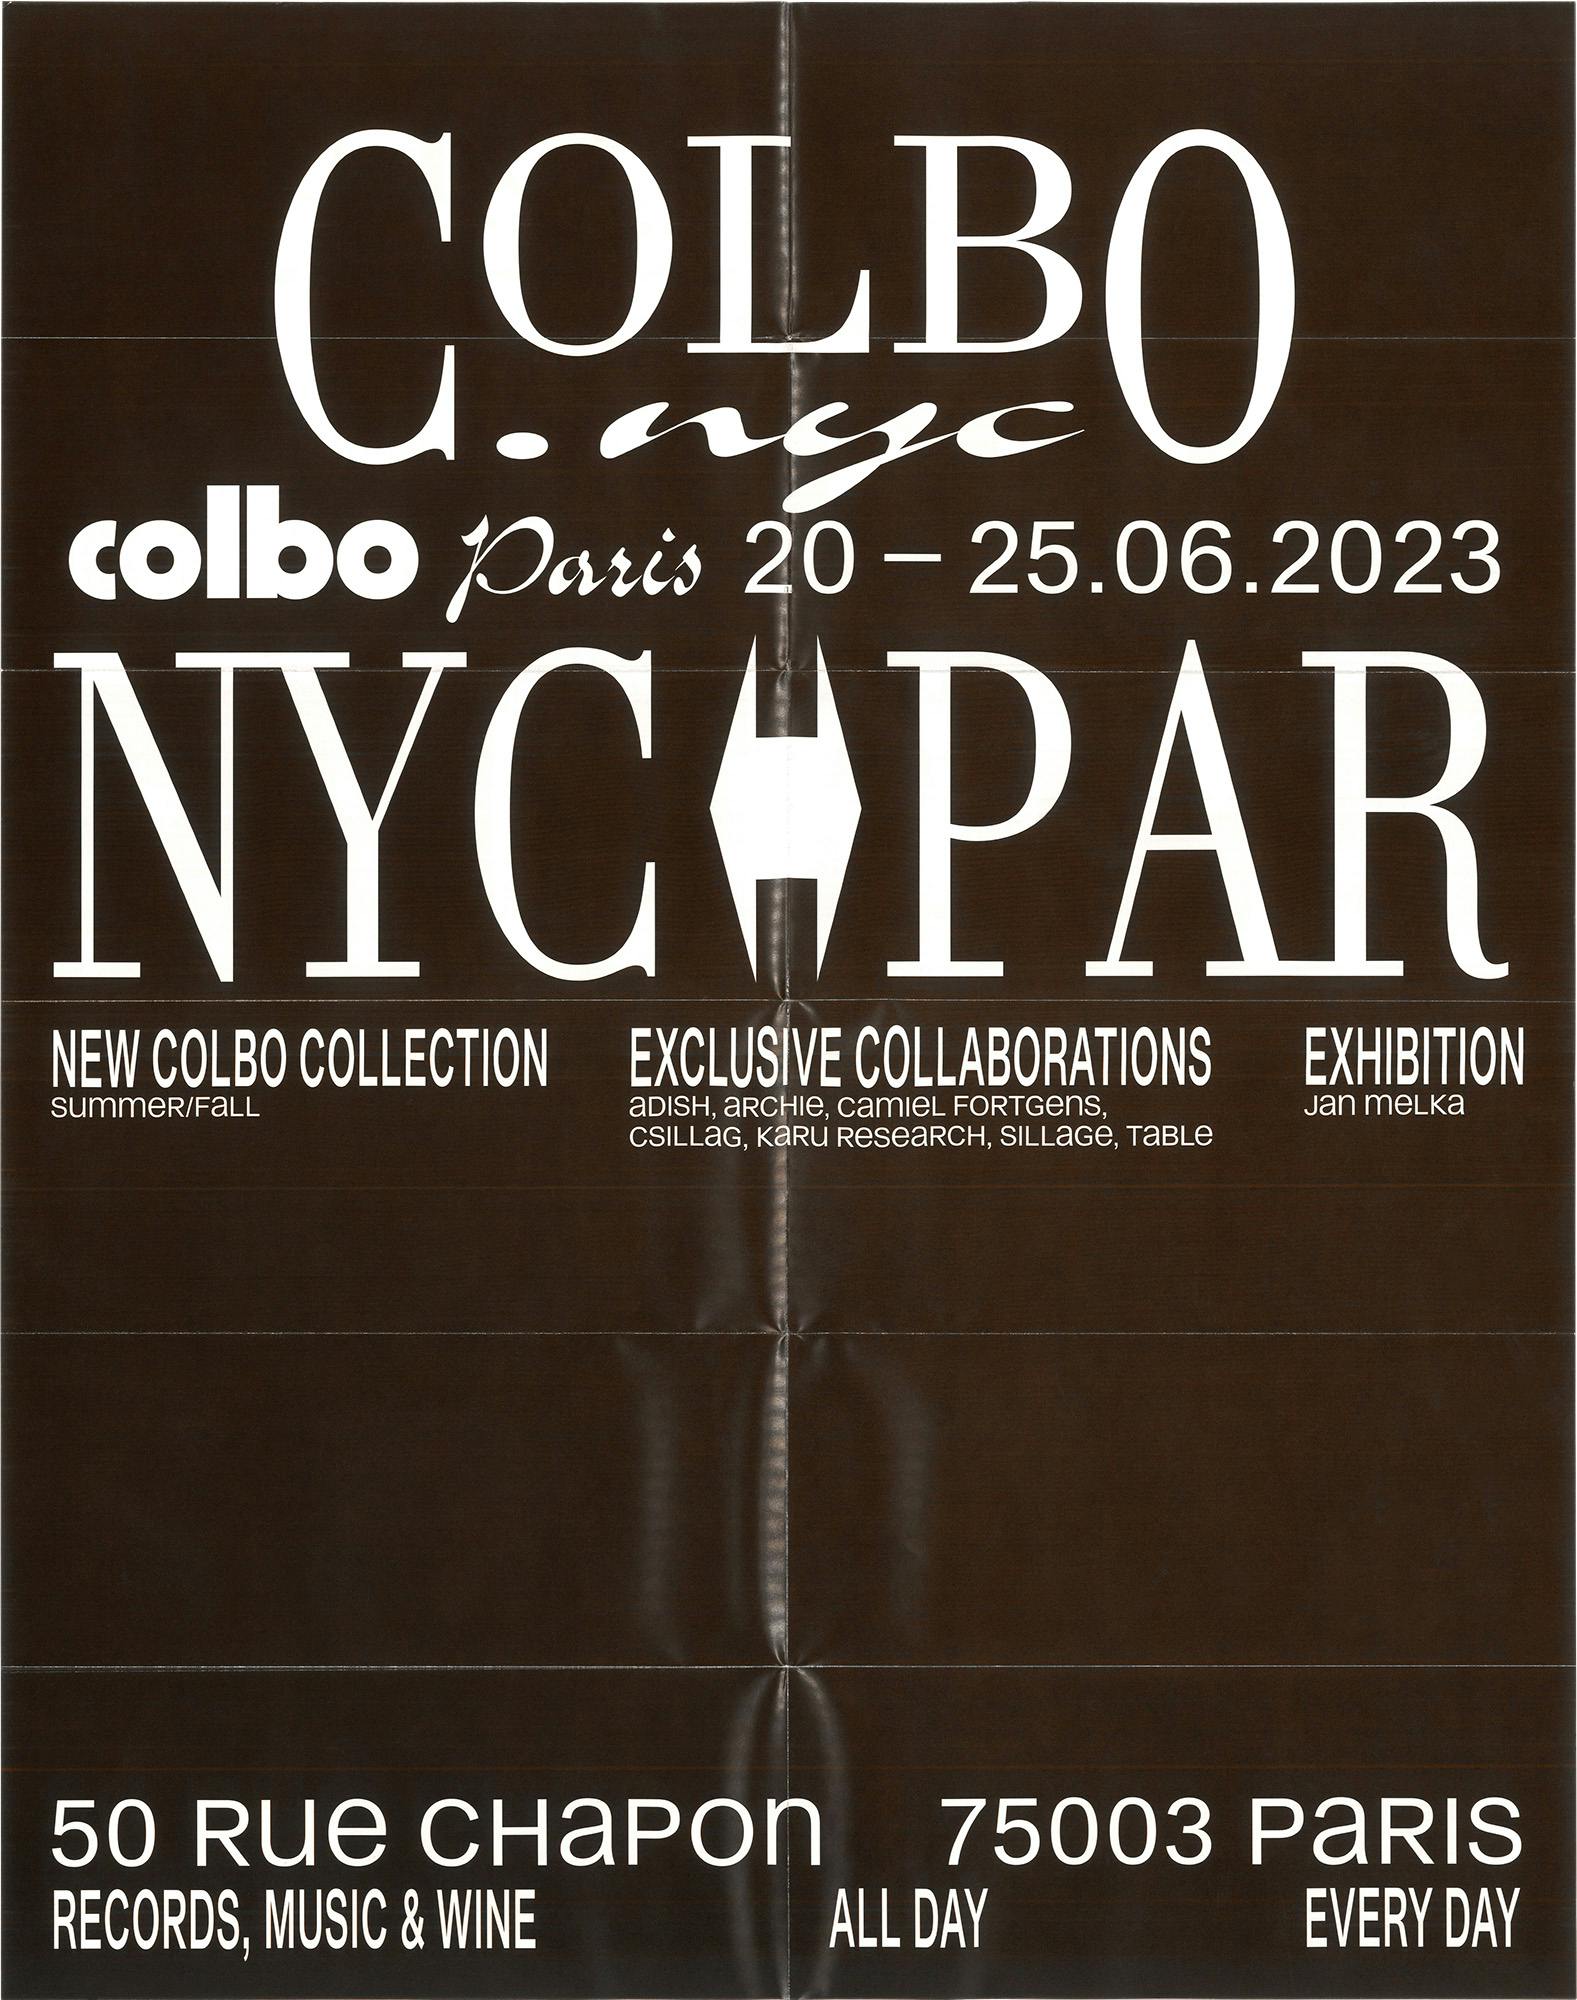 Colbo Paris - Visual Identity